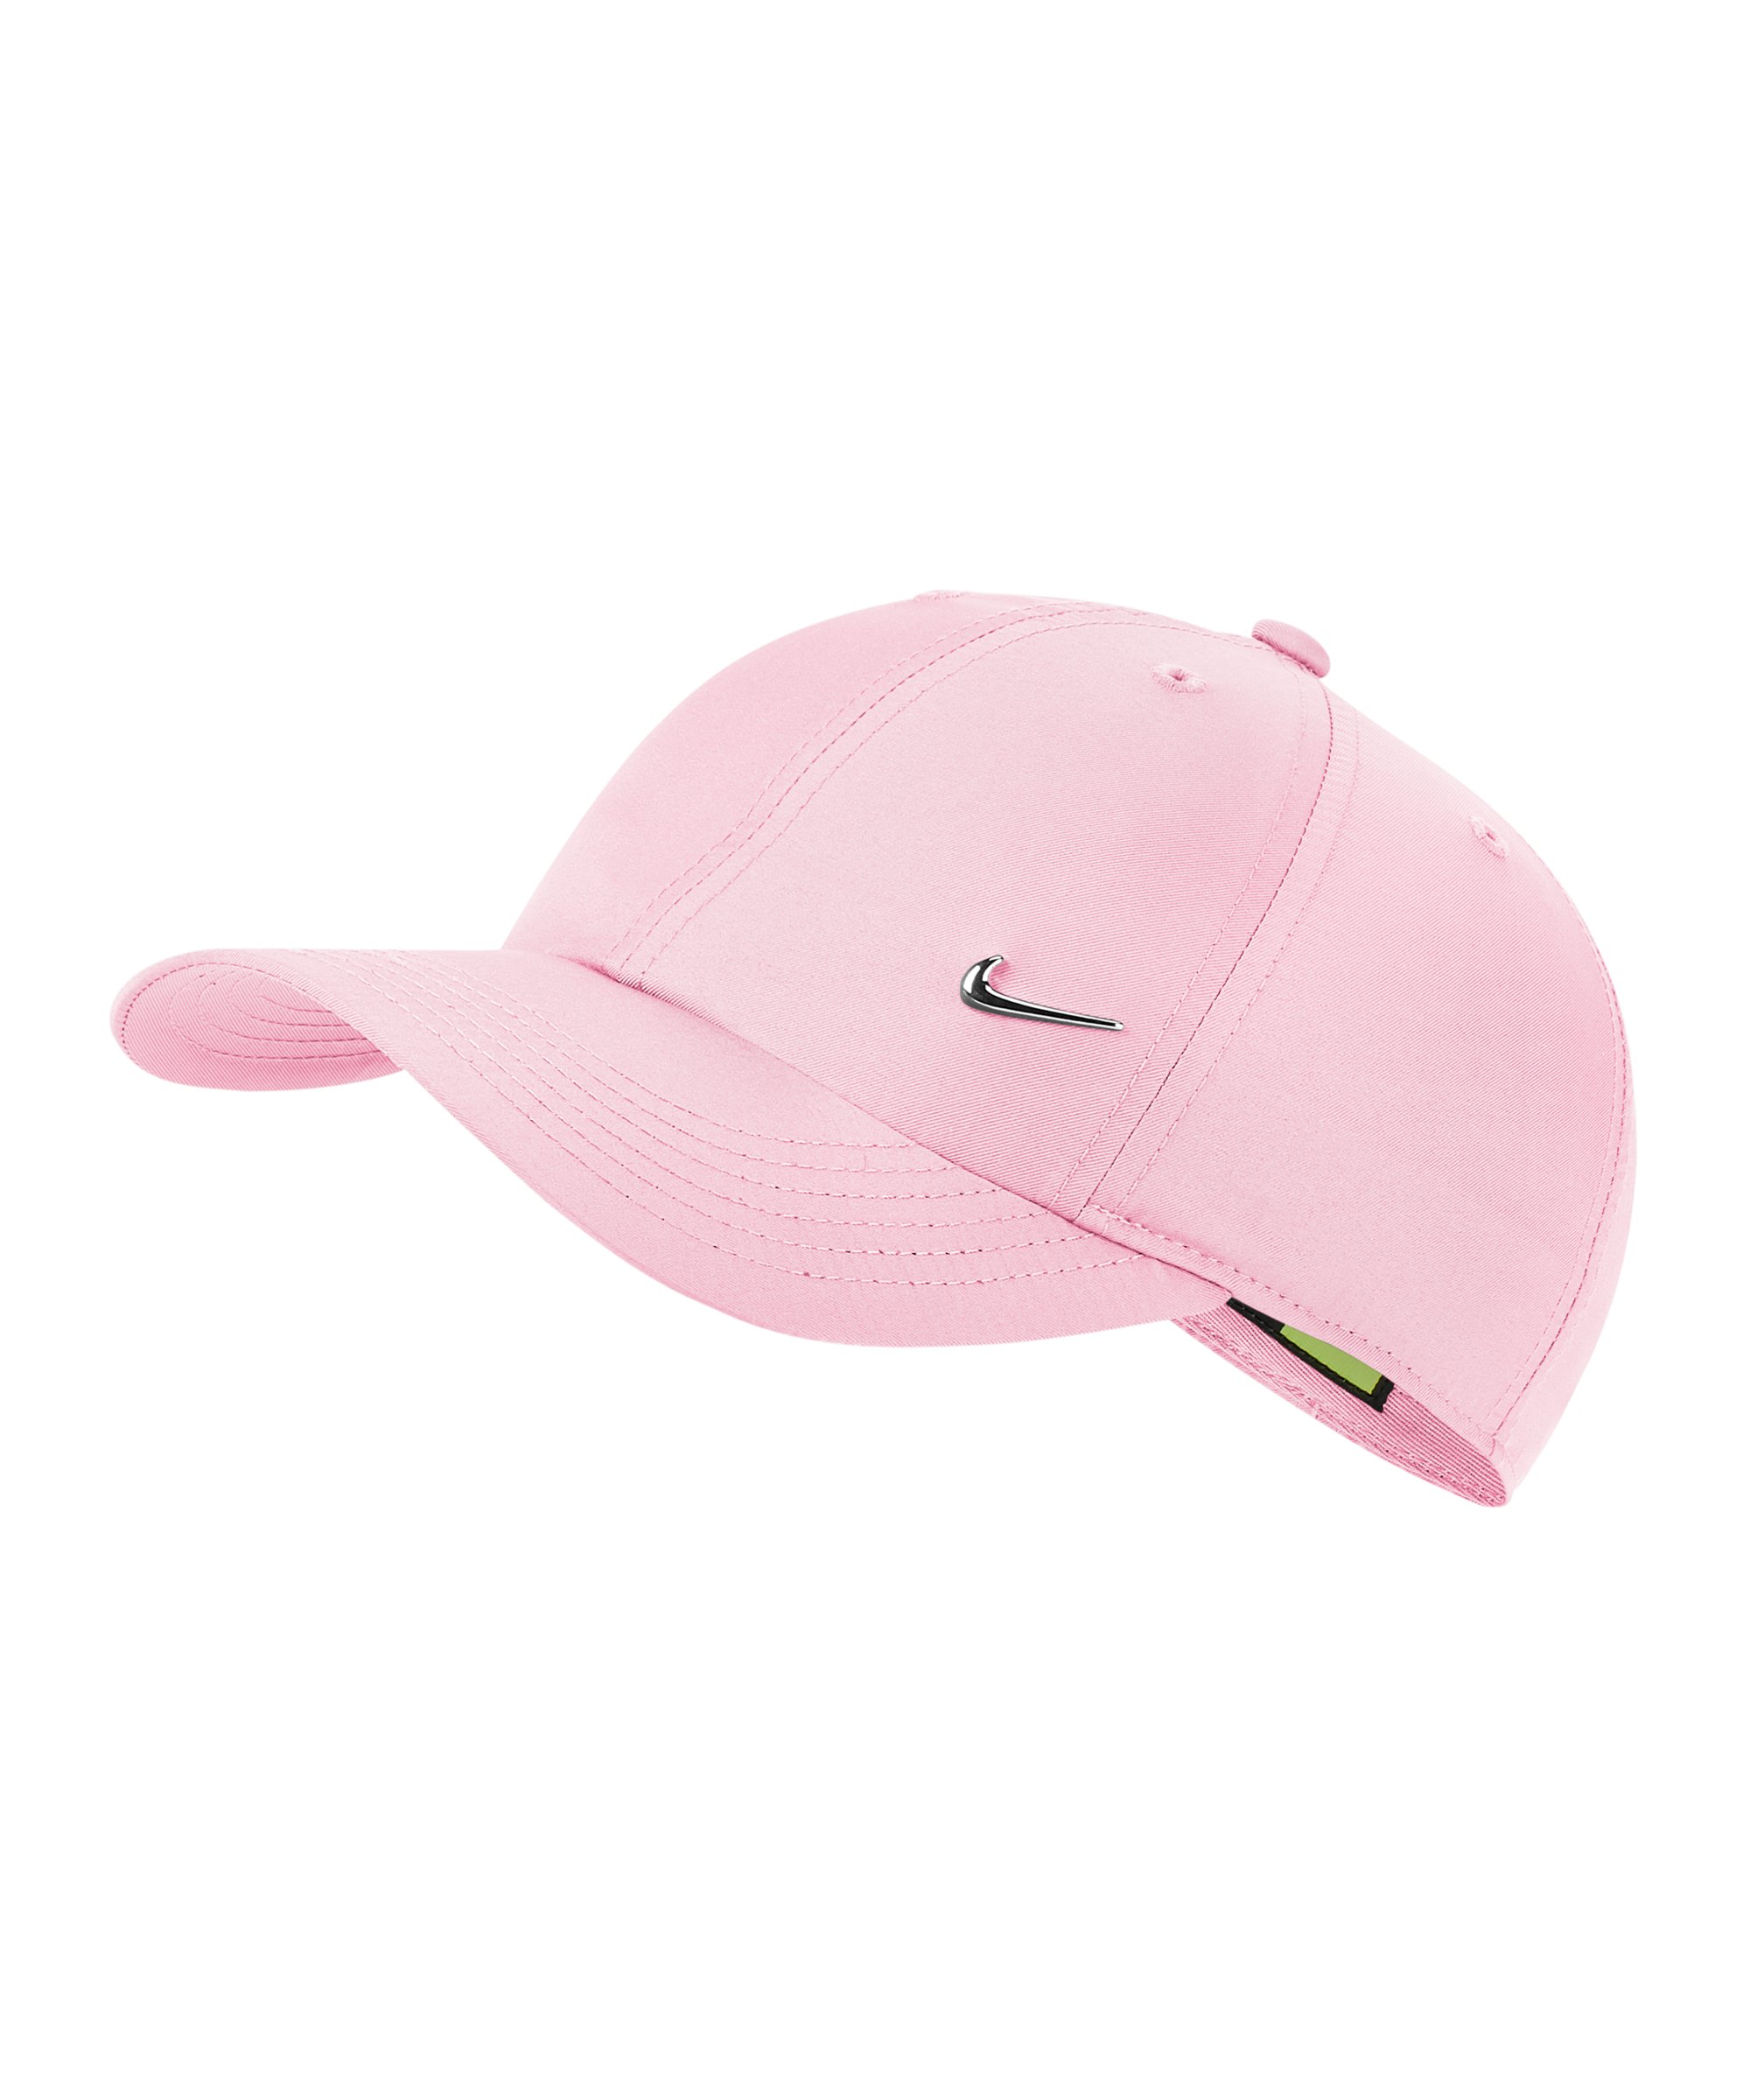 Nike Heritage 86 Adjustable Cap Kids Pink F664 - pink